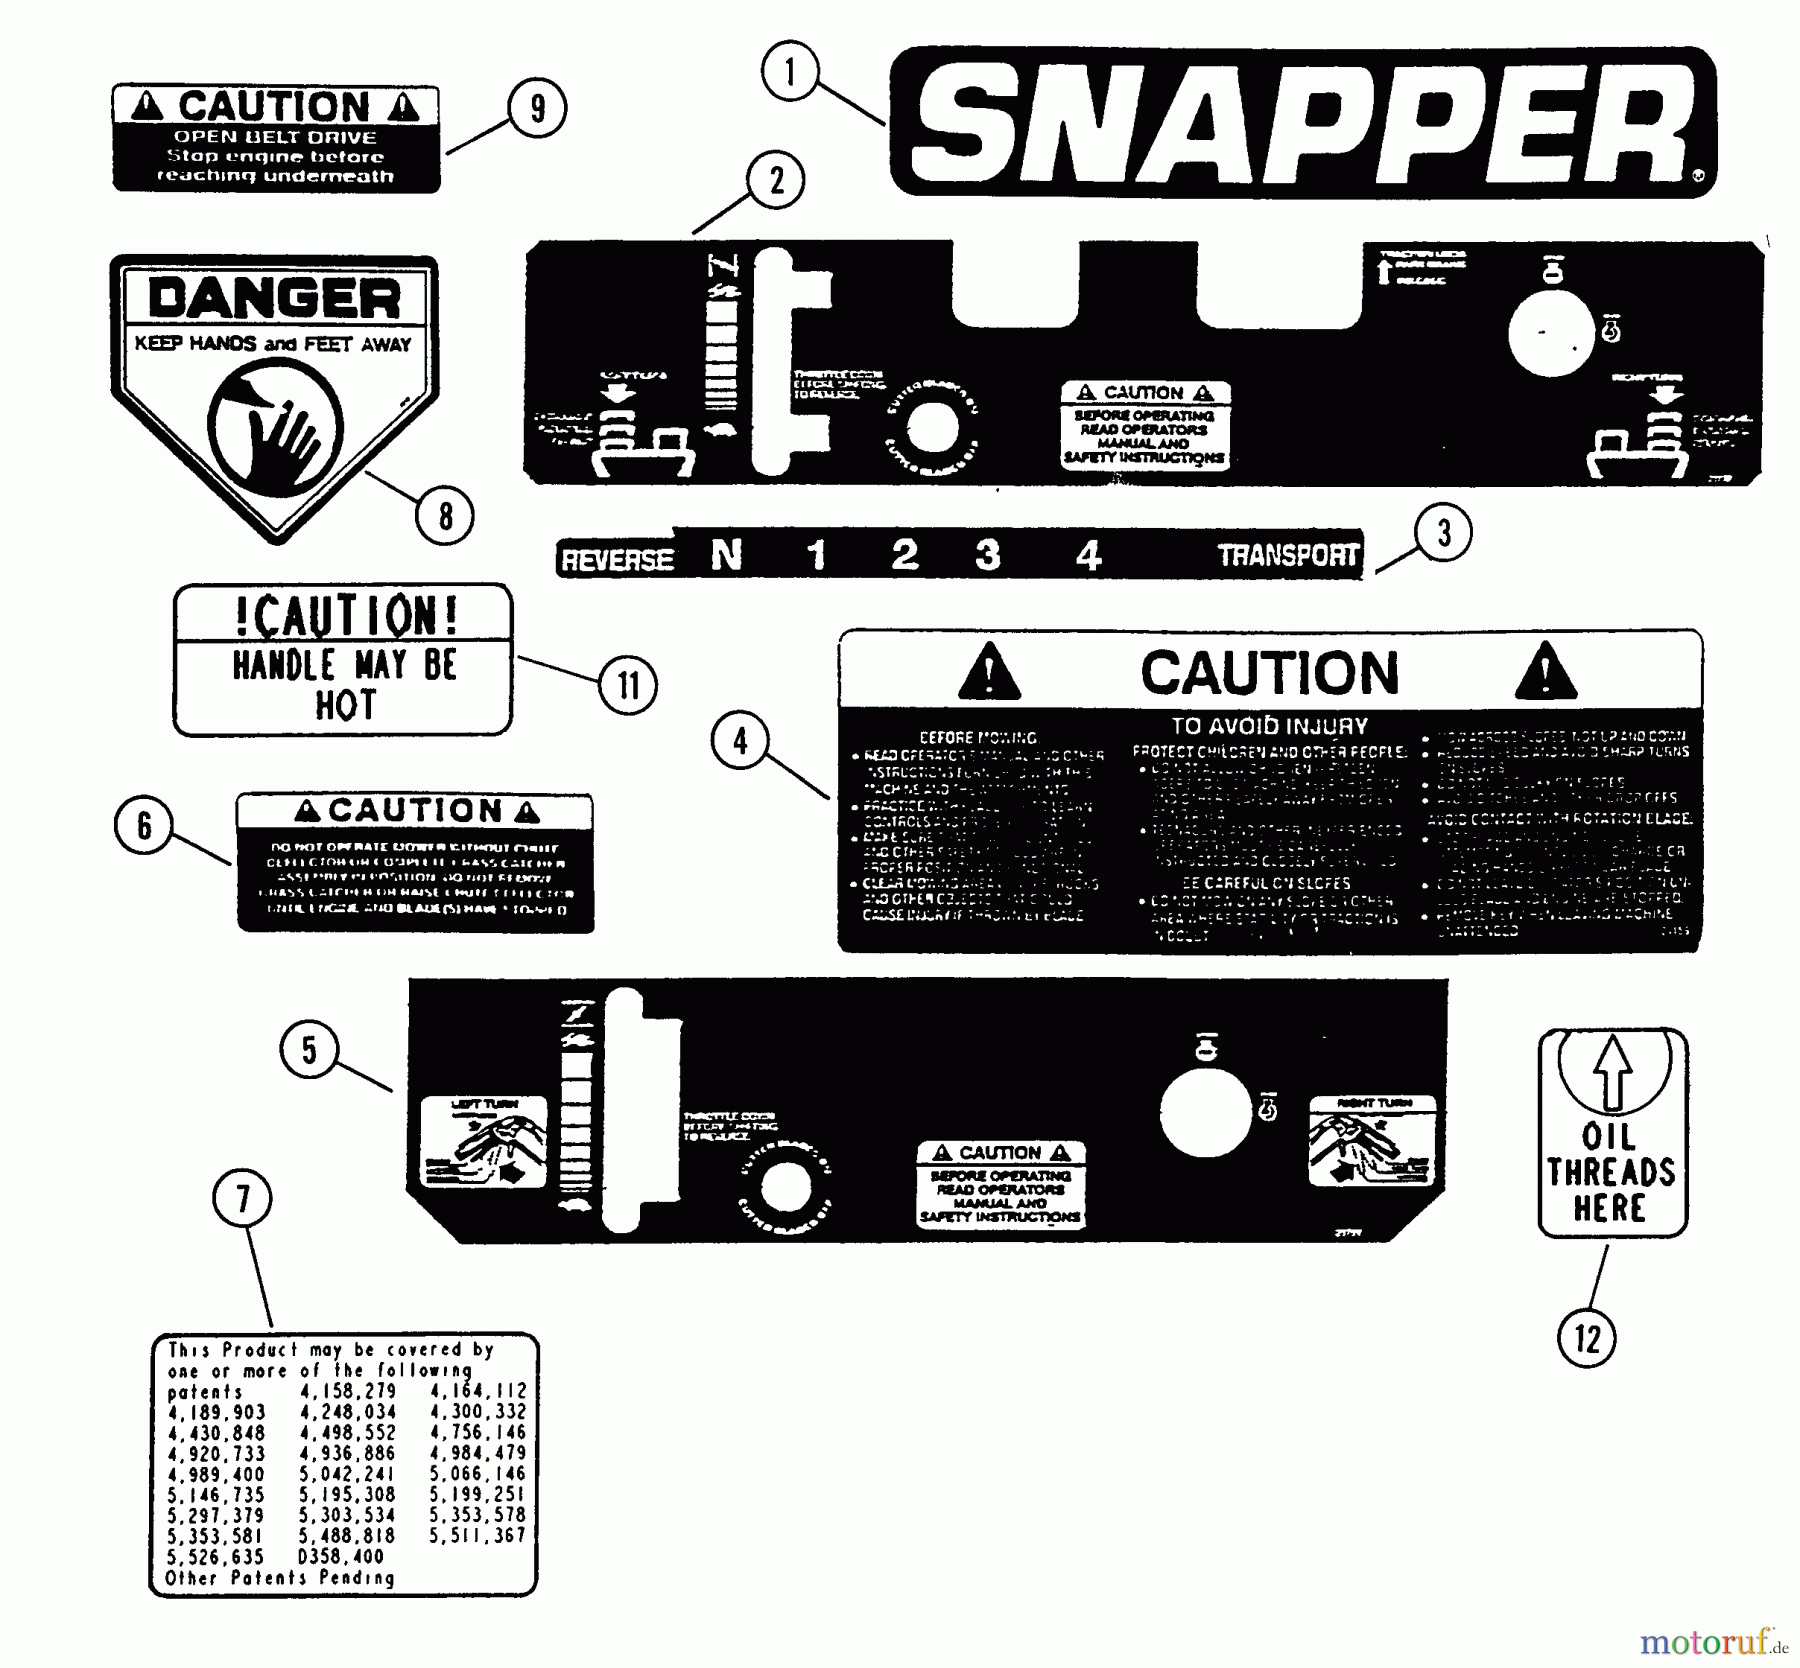  Snapper Rasenmäher für Großflächen SPP160BV - Snapper Wide-Area Walk-Behind Mower, 16 HP, Gear Drive, Pistol Grip, Series 0 Decals